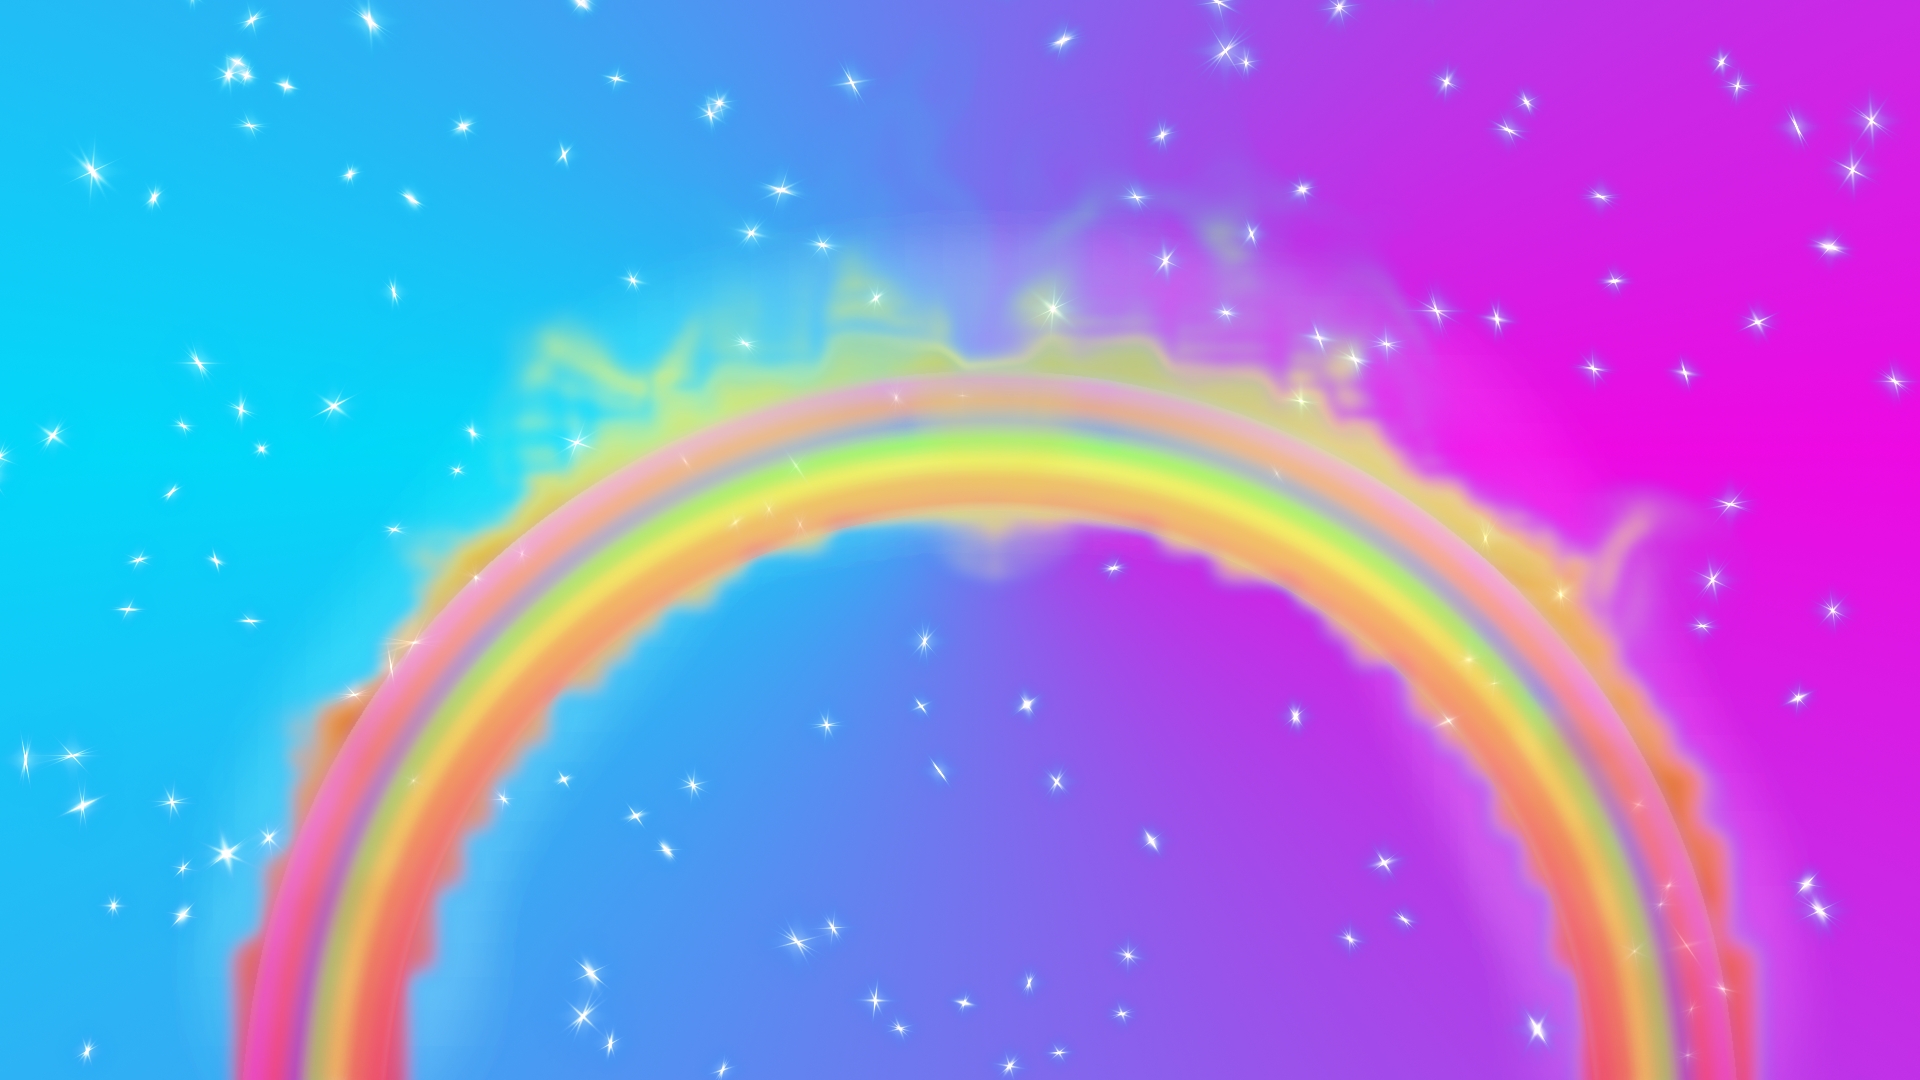 49+] Rainbow Wallpaper Backgrounds - WallpaperSafari